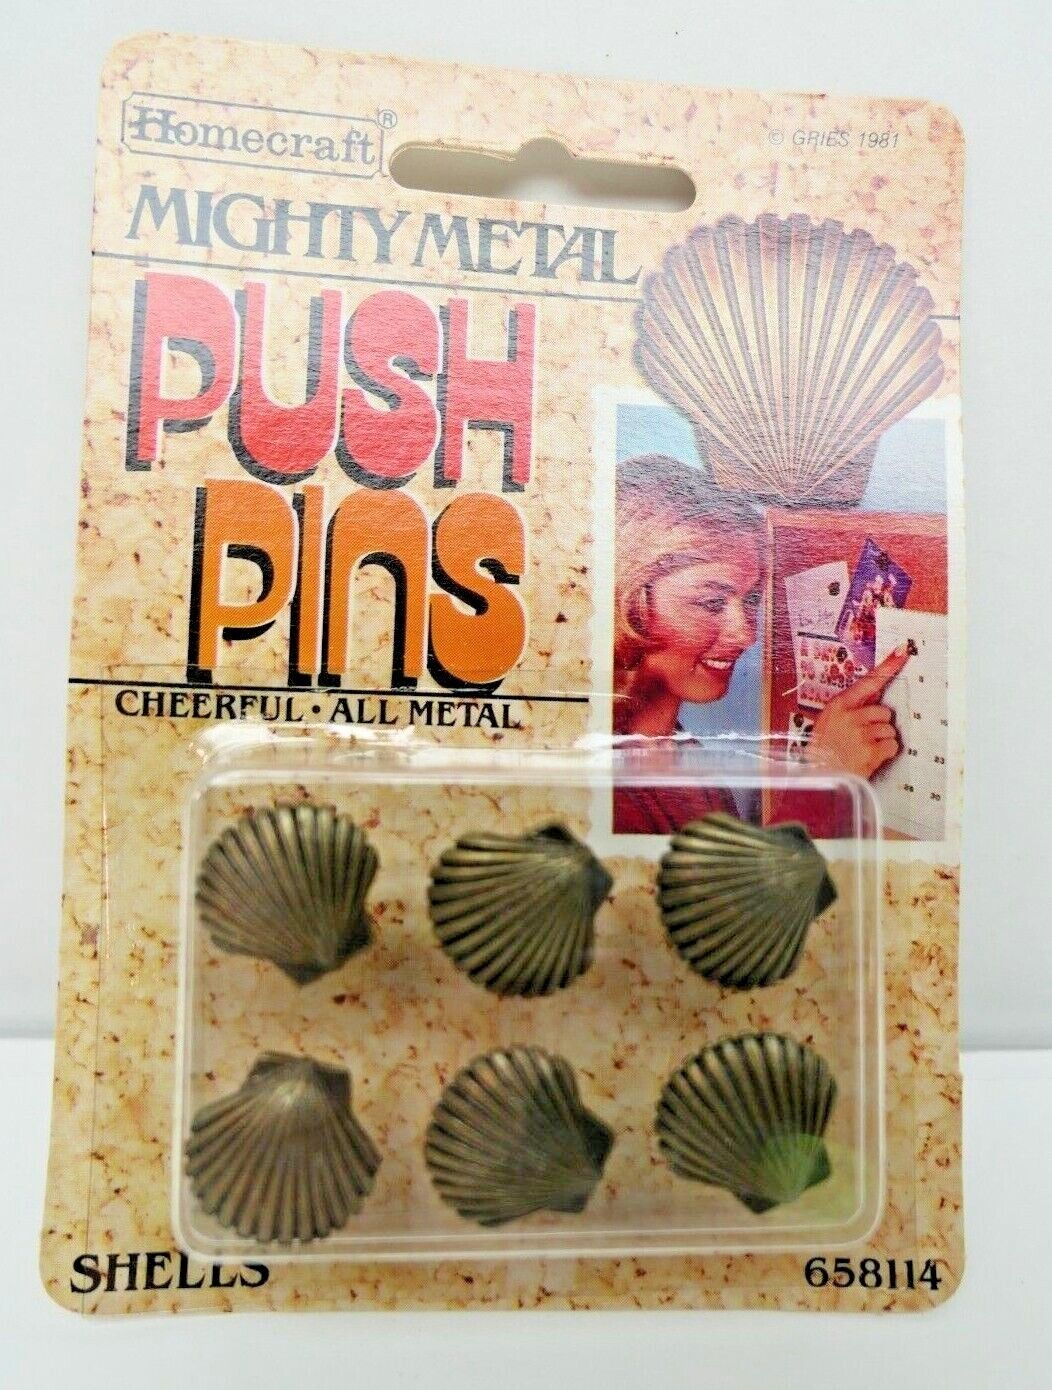 RARE Vintage 1981 Homecraft Mighty Metal Pushpins 6pk Seashells #658114 NOS 